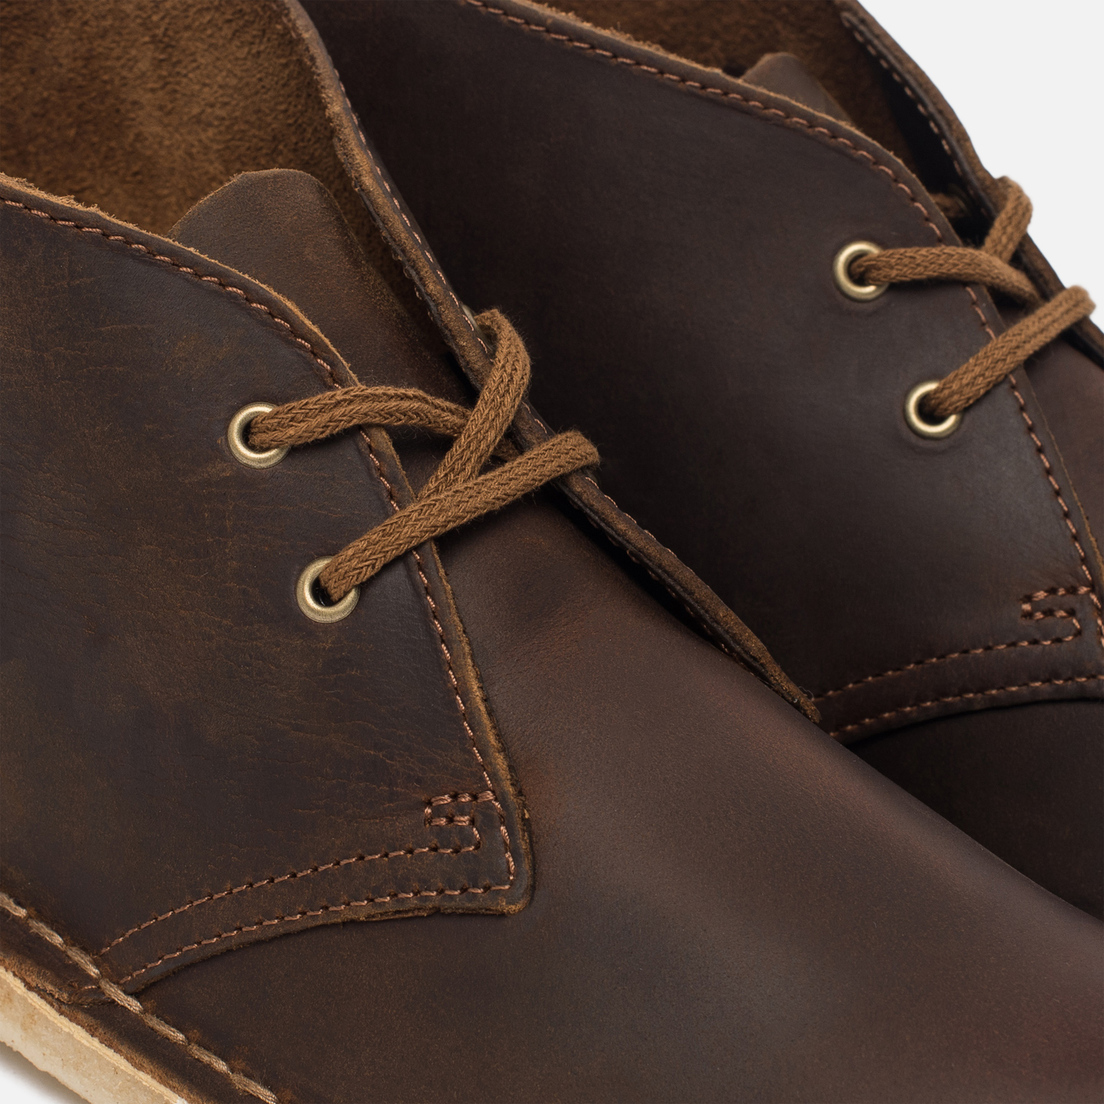 Clarks Originals Женские ботинки Desert Boot Leather